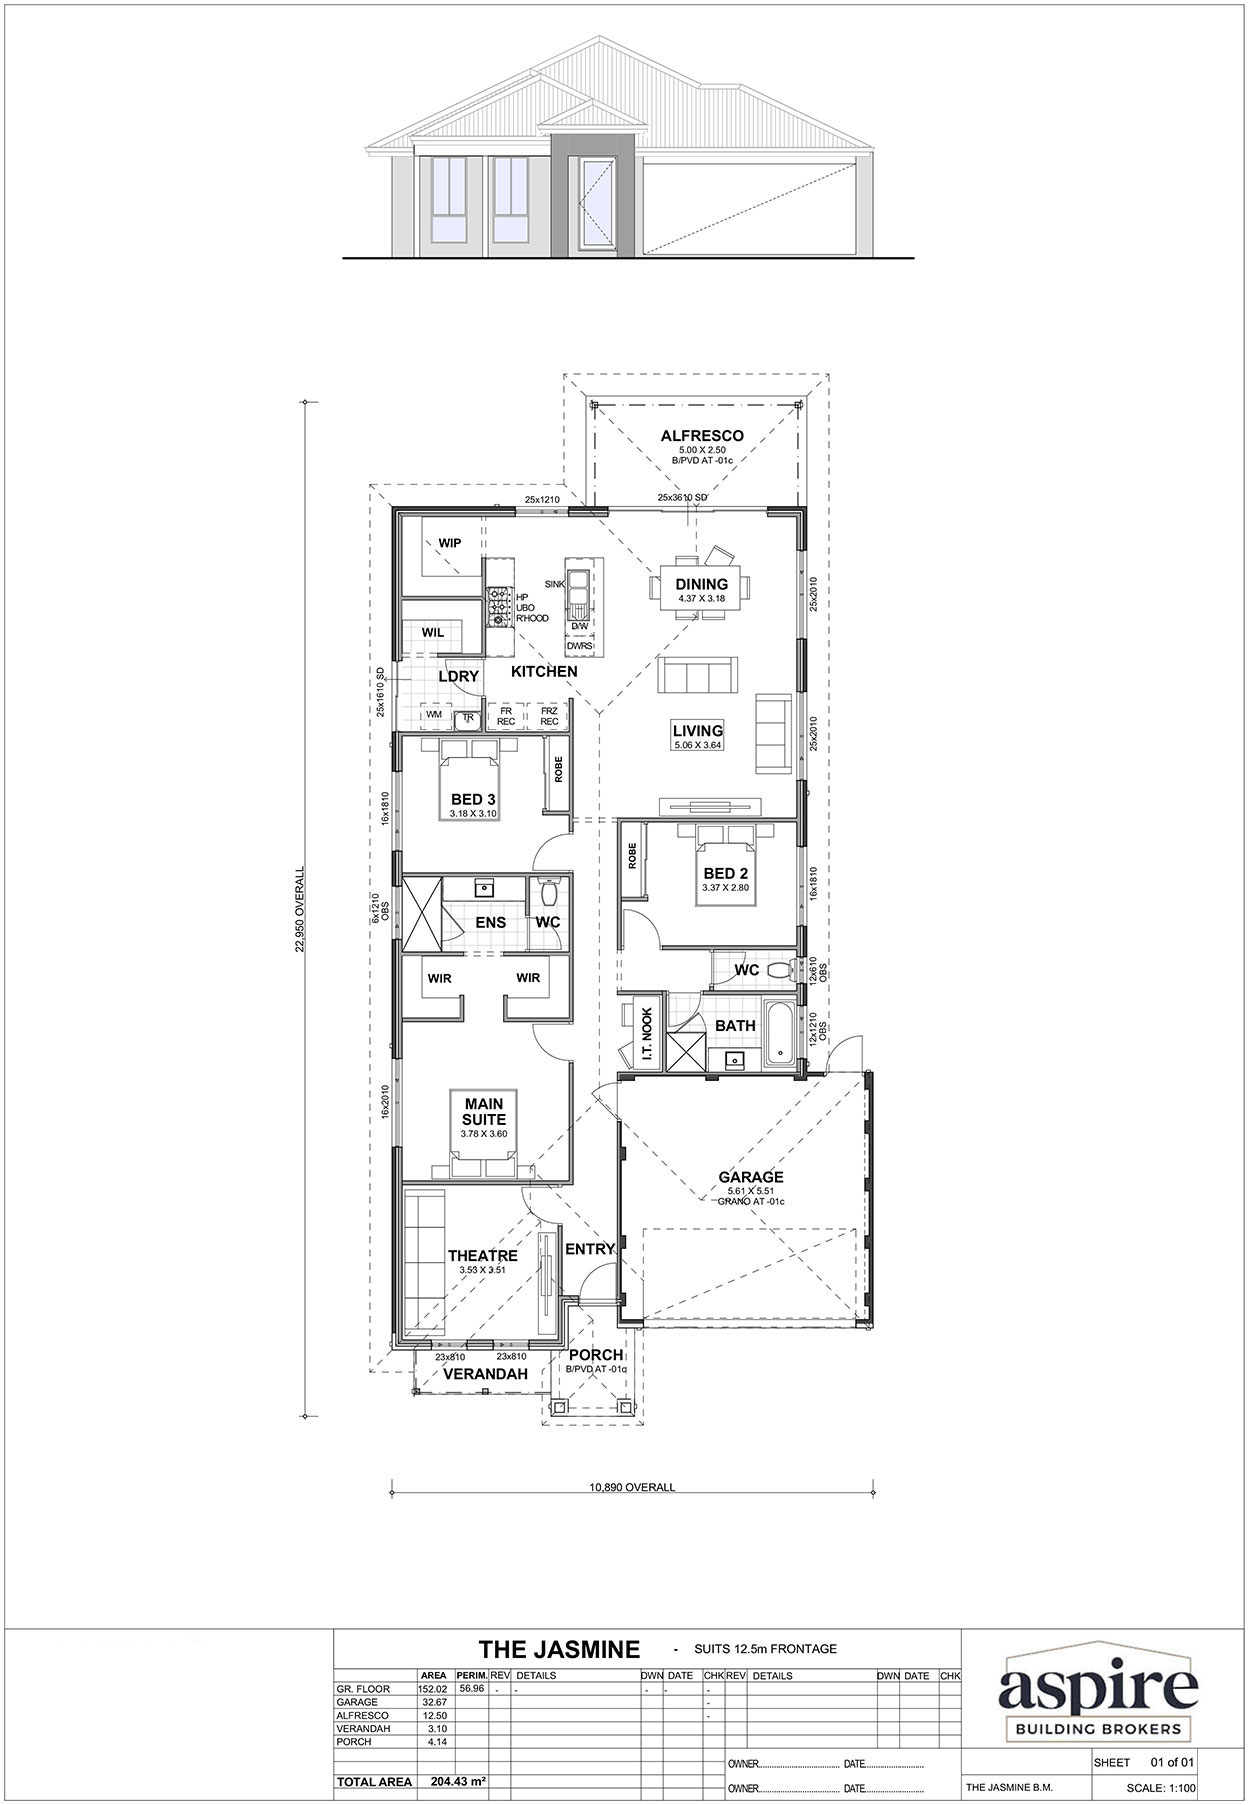 The Jasmine Floor Plan - Perth New Build Home Designs. 3 Bedrooms and 12.5m Block Width. Aspire Building Brokers